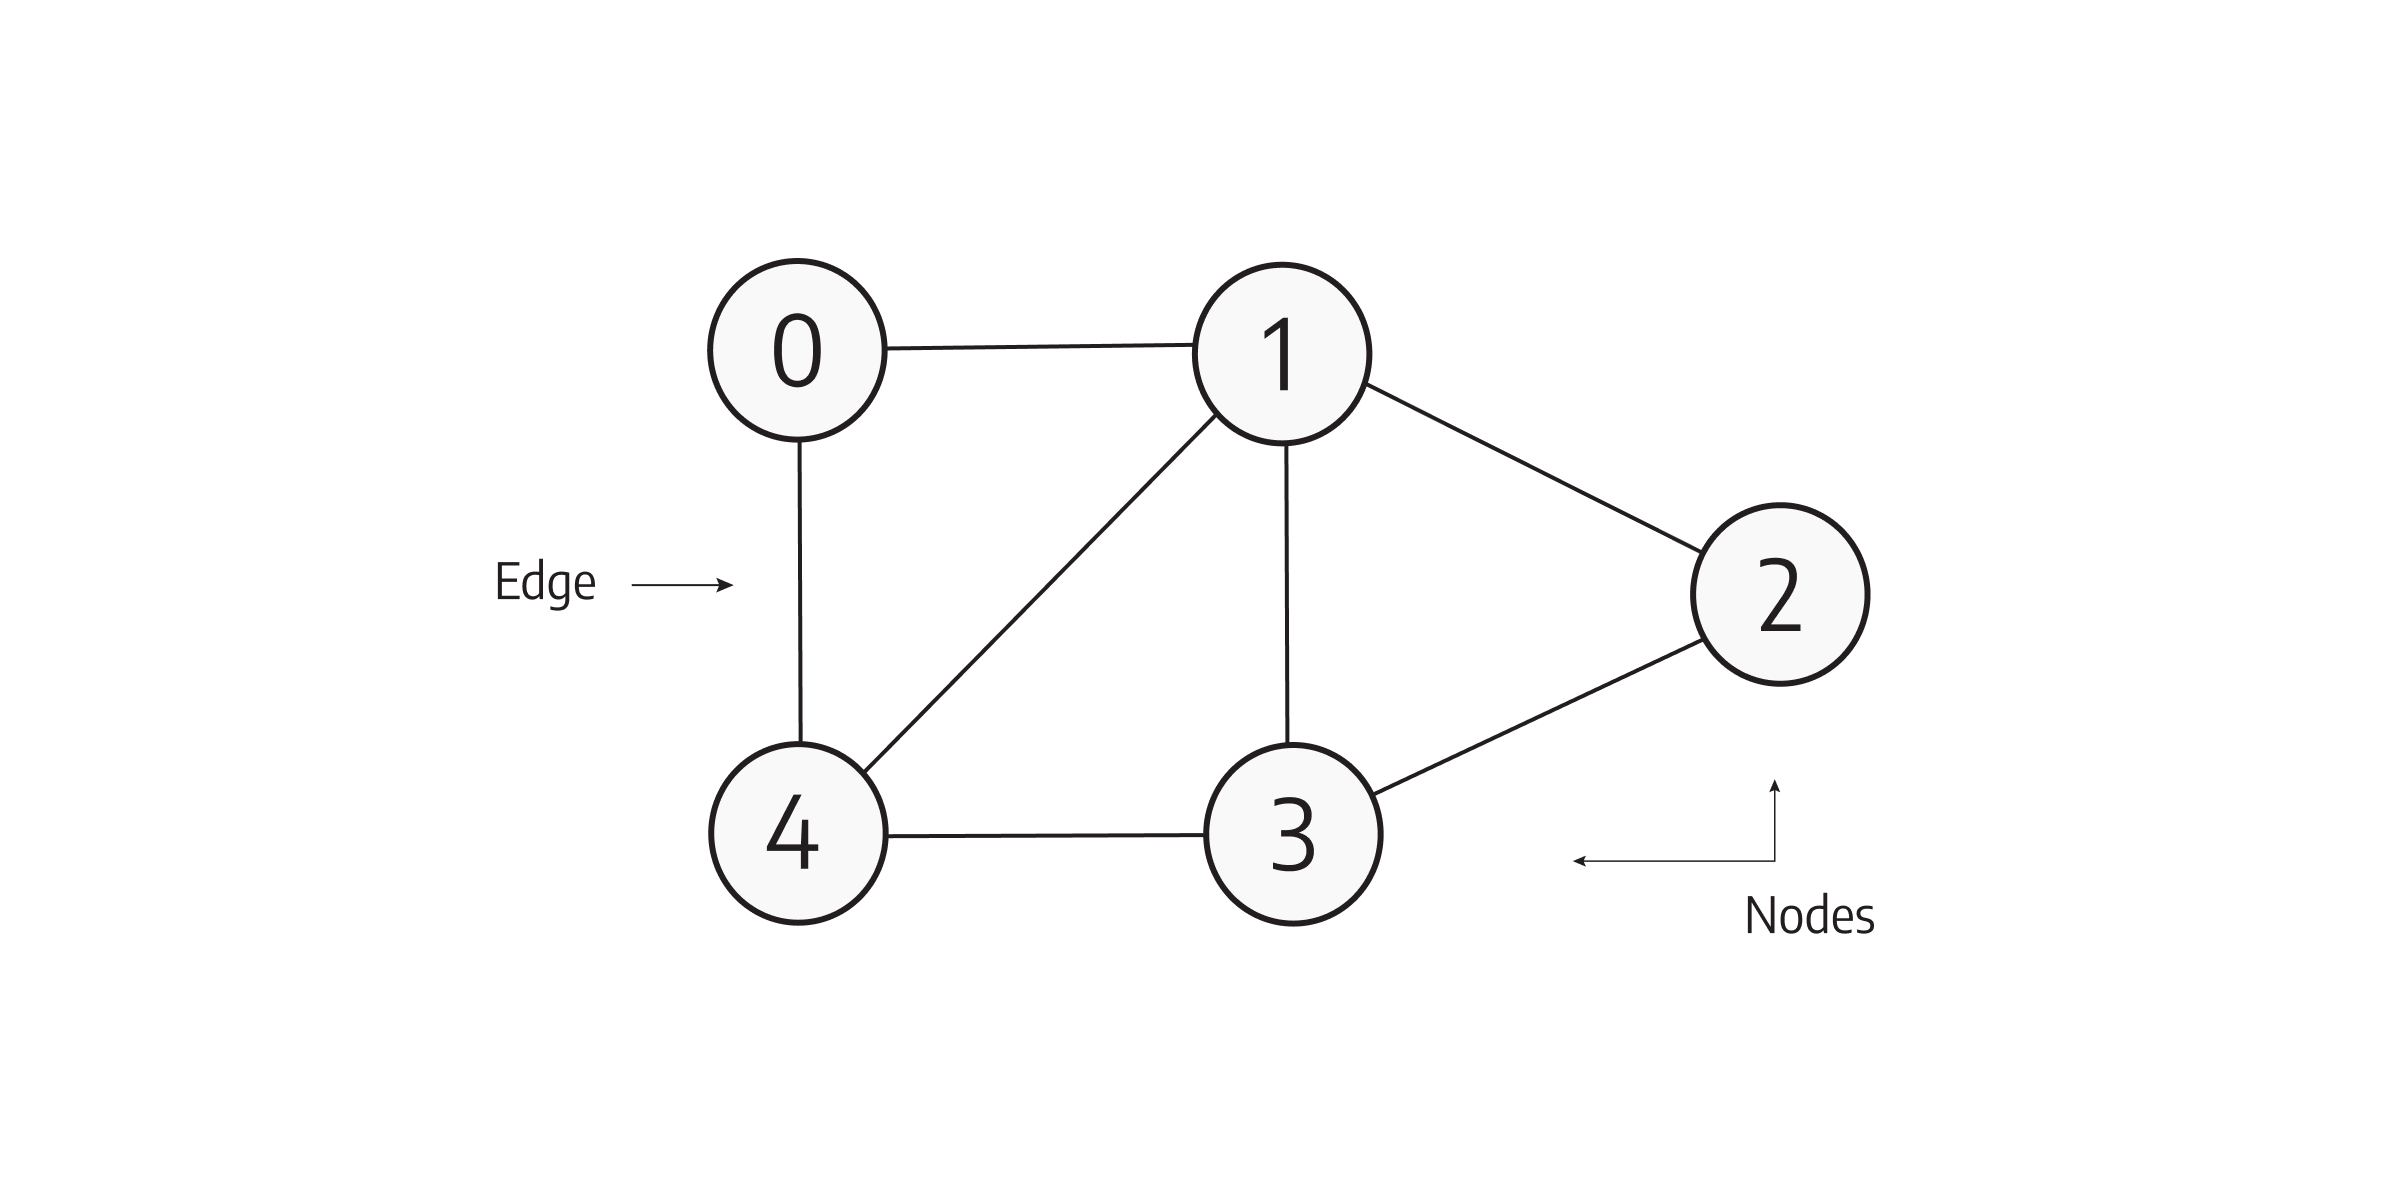 nodes and edges